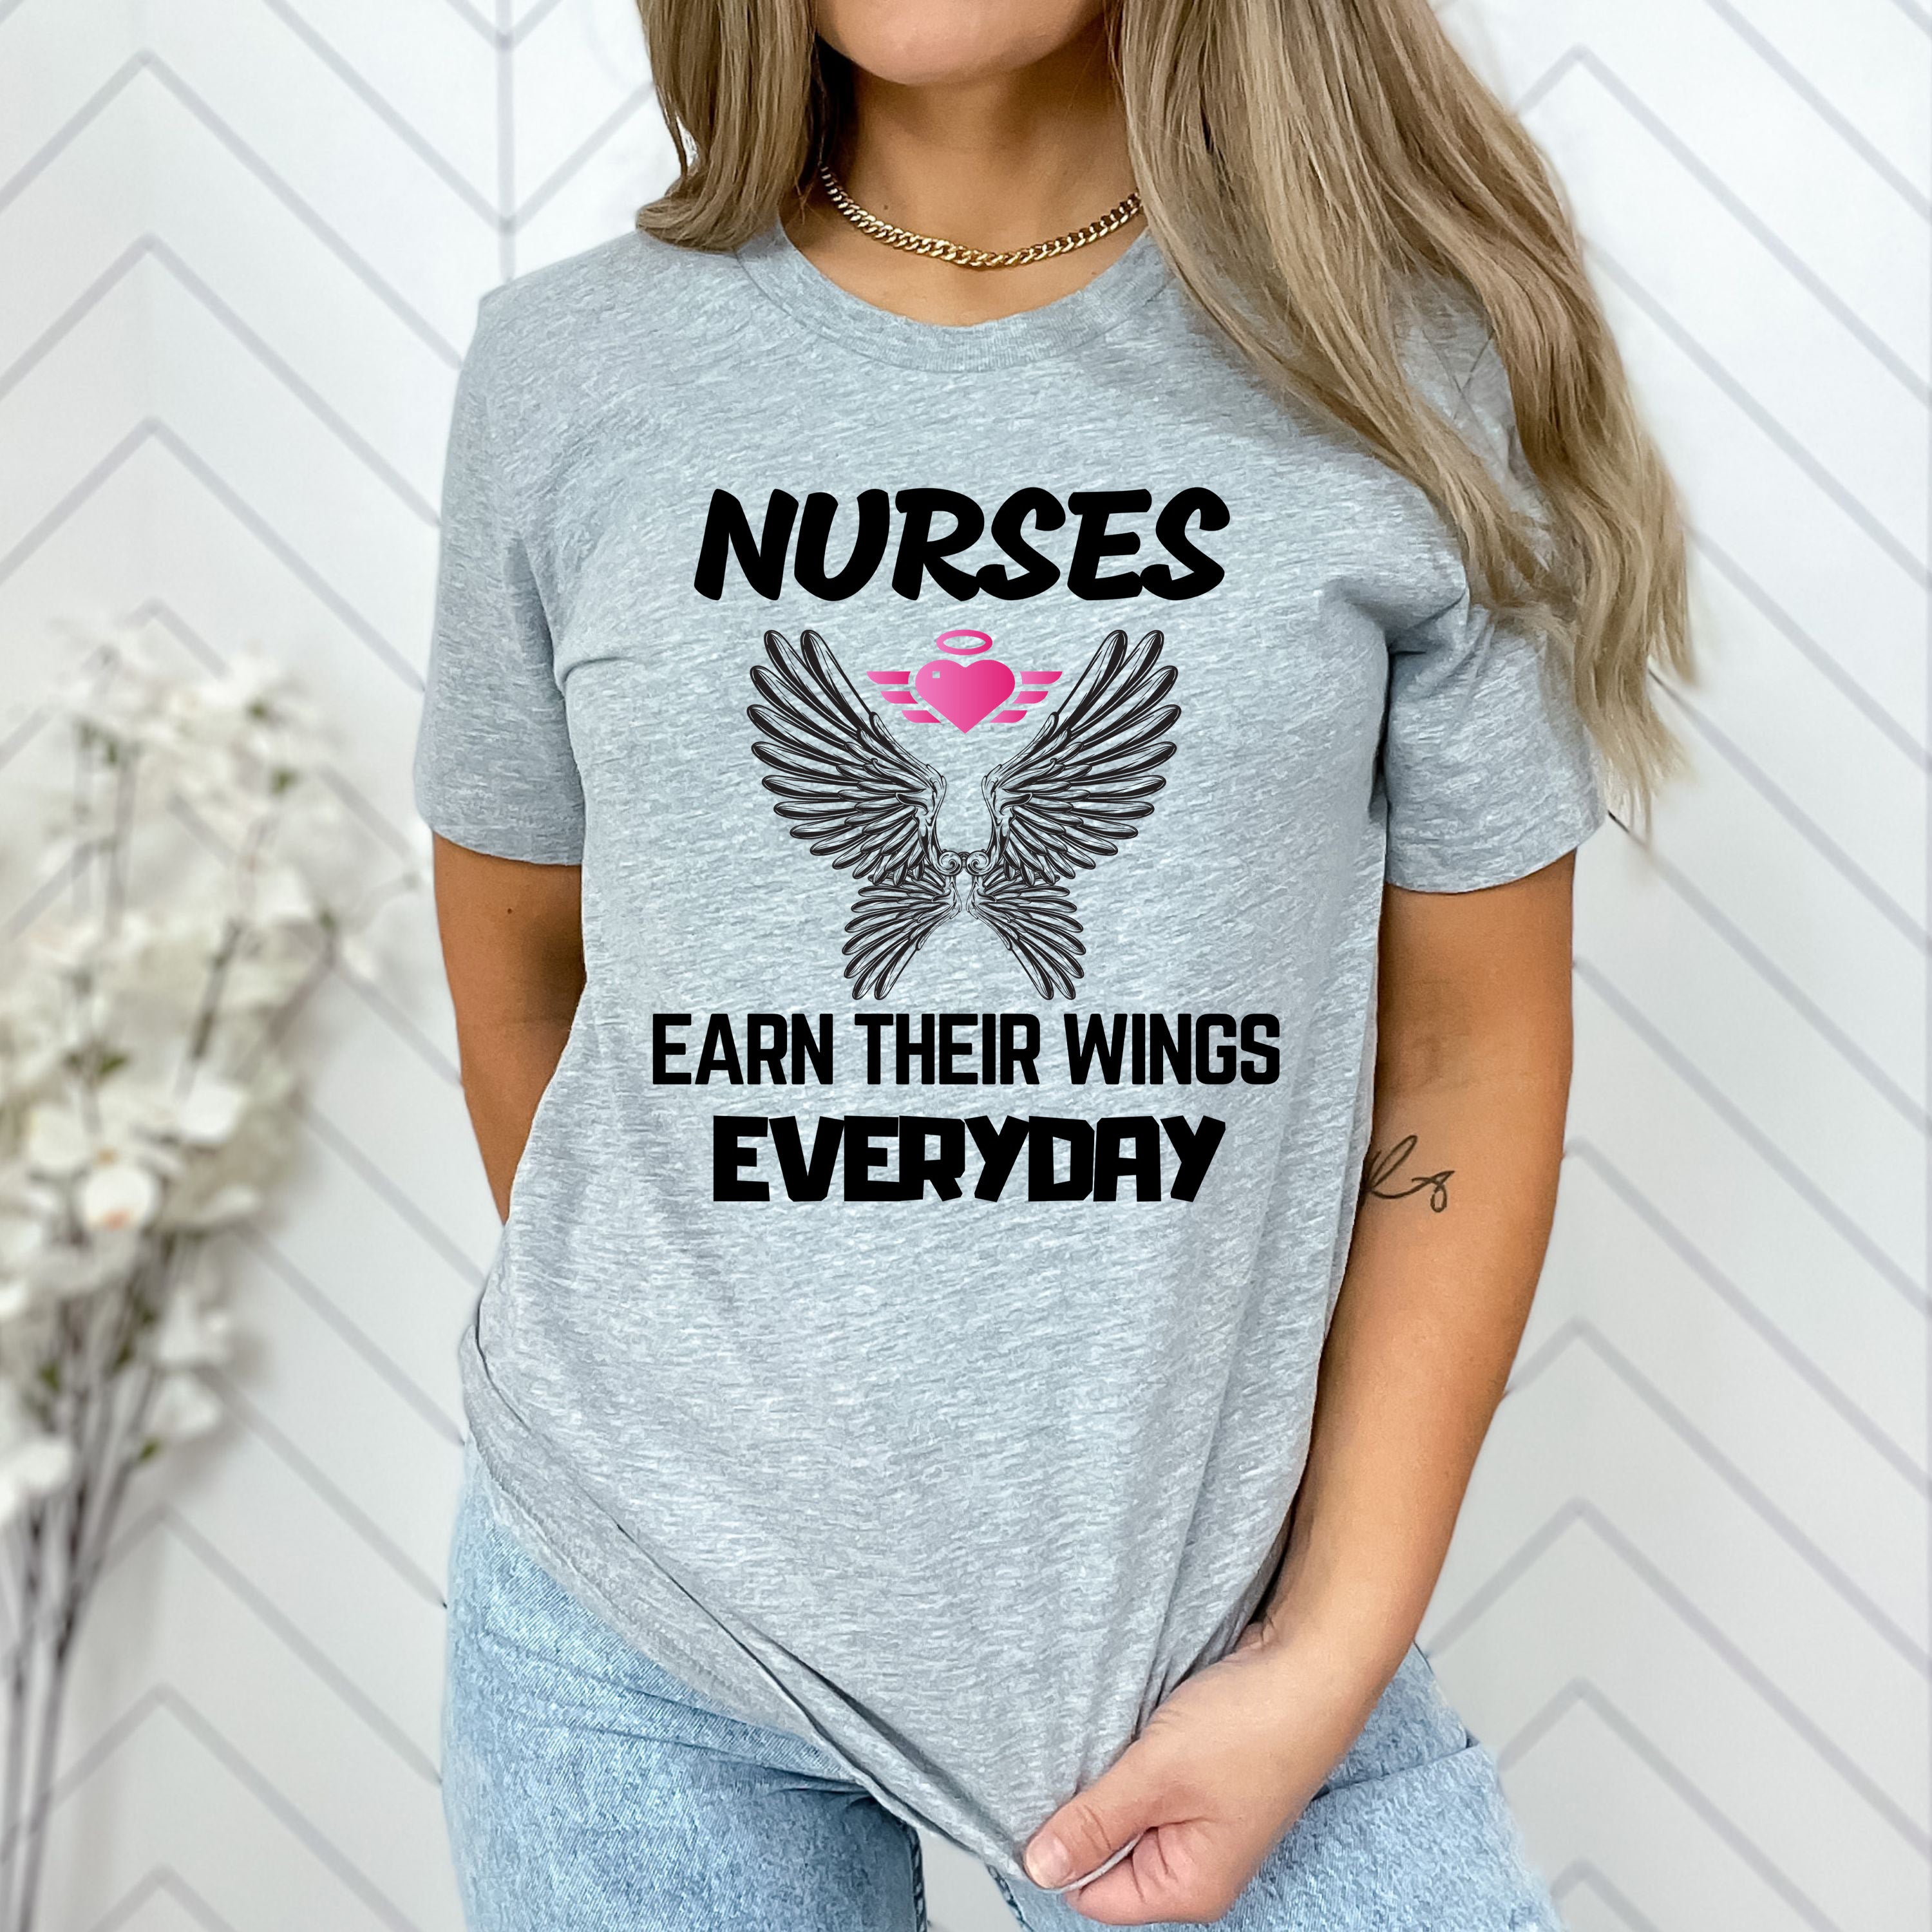 "NURSES EARN THEIR WINGS EVERYDAY" T-shirt